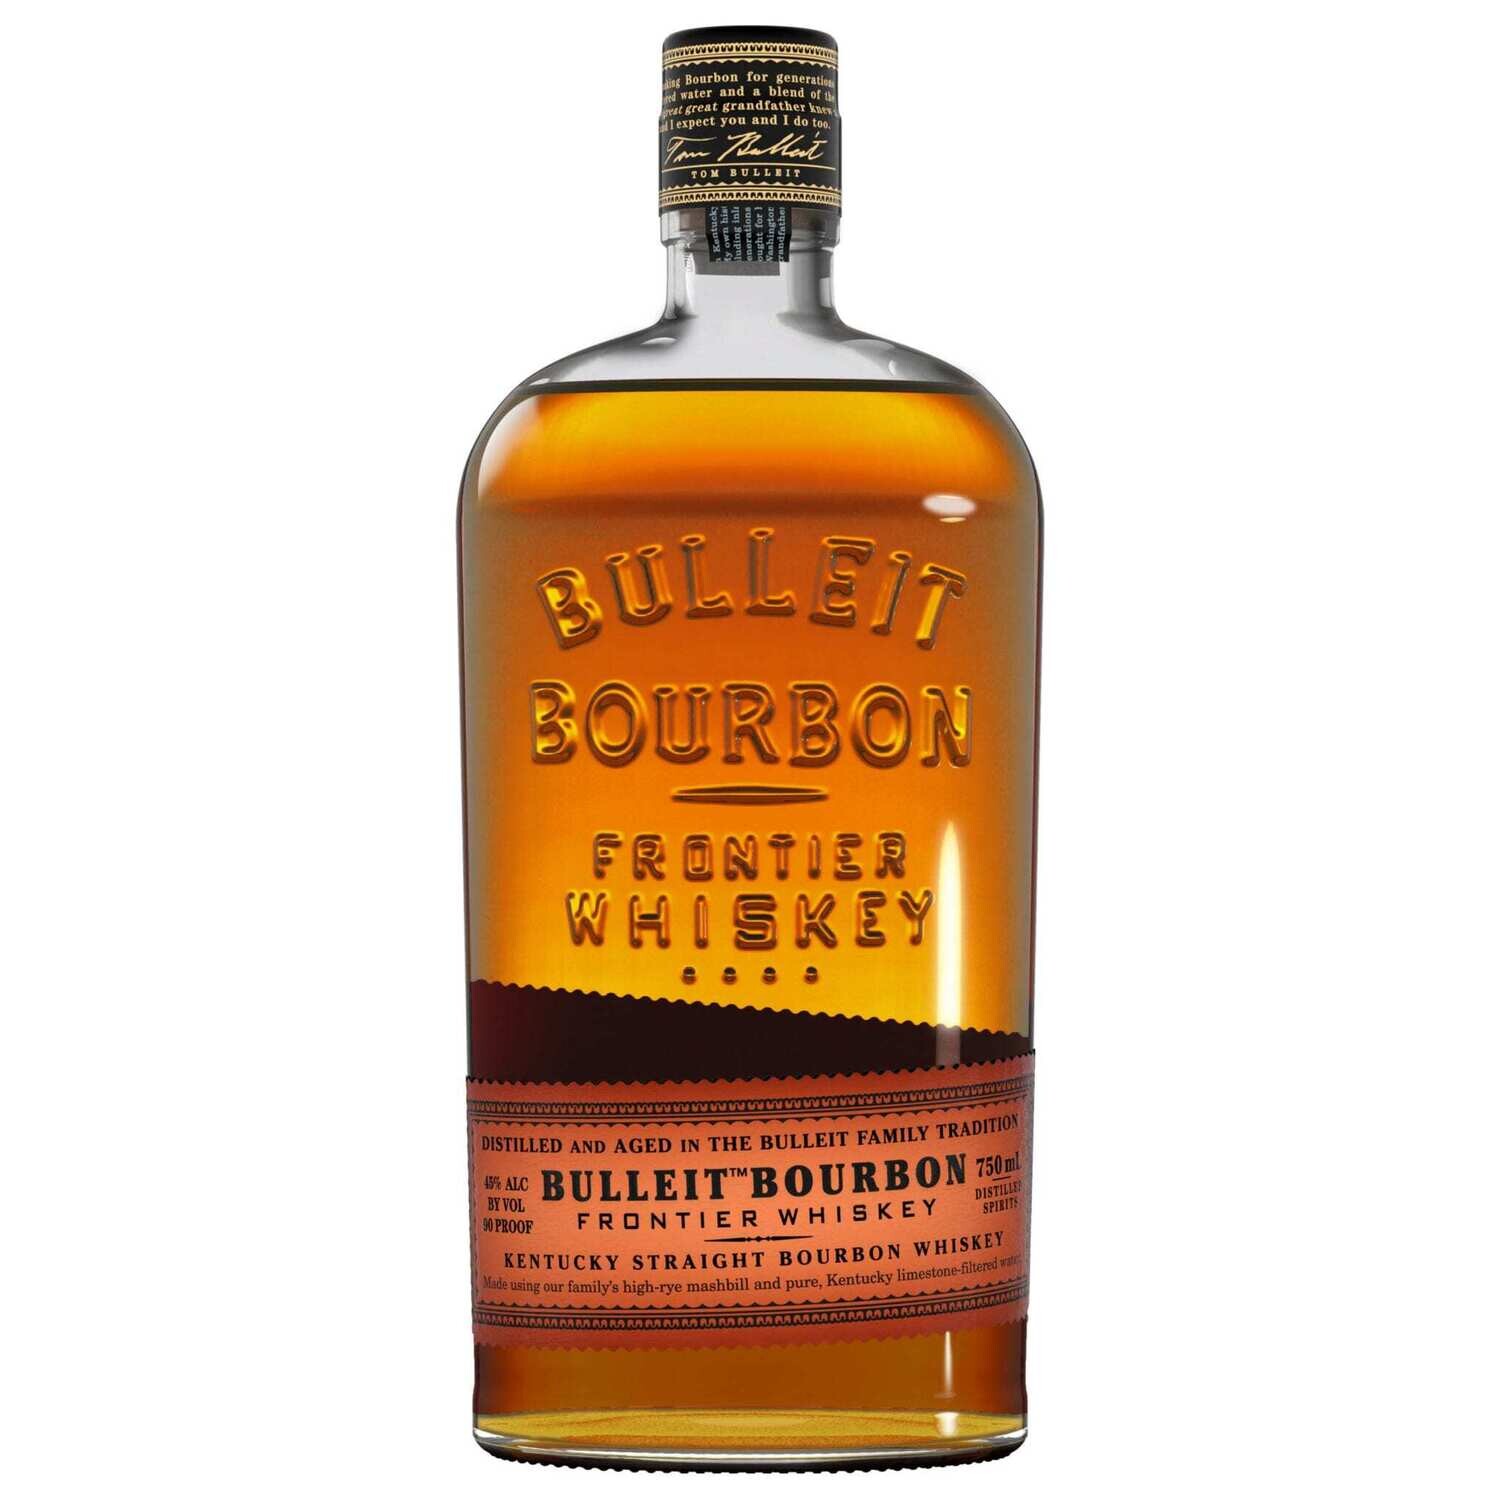 Bulliet Bourbon Regular